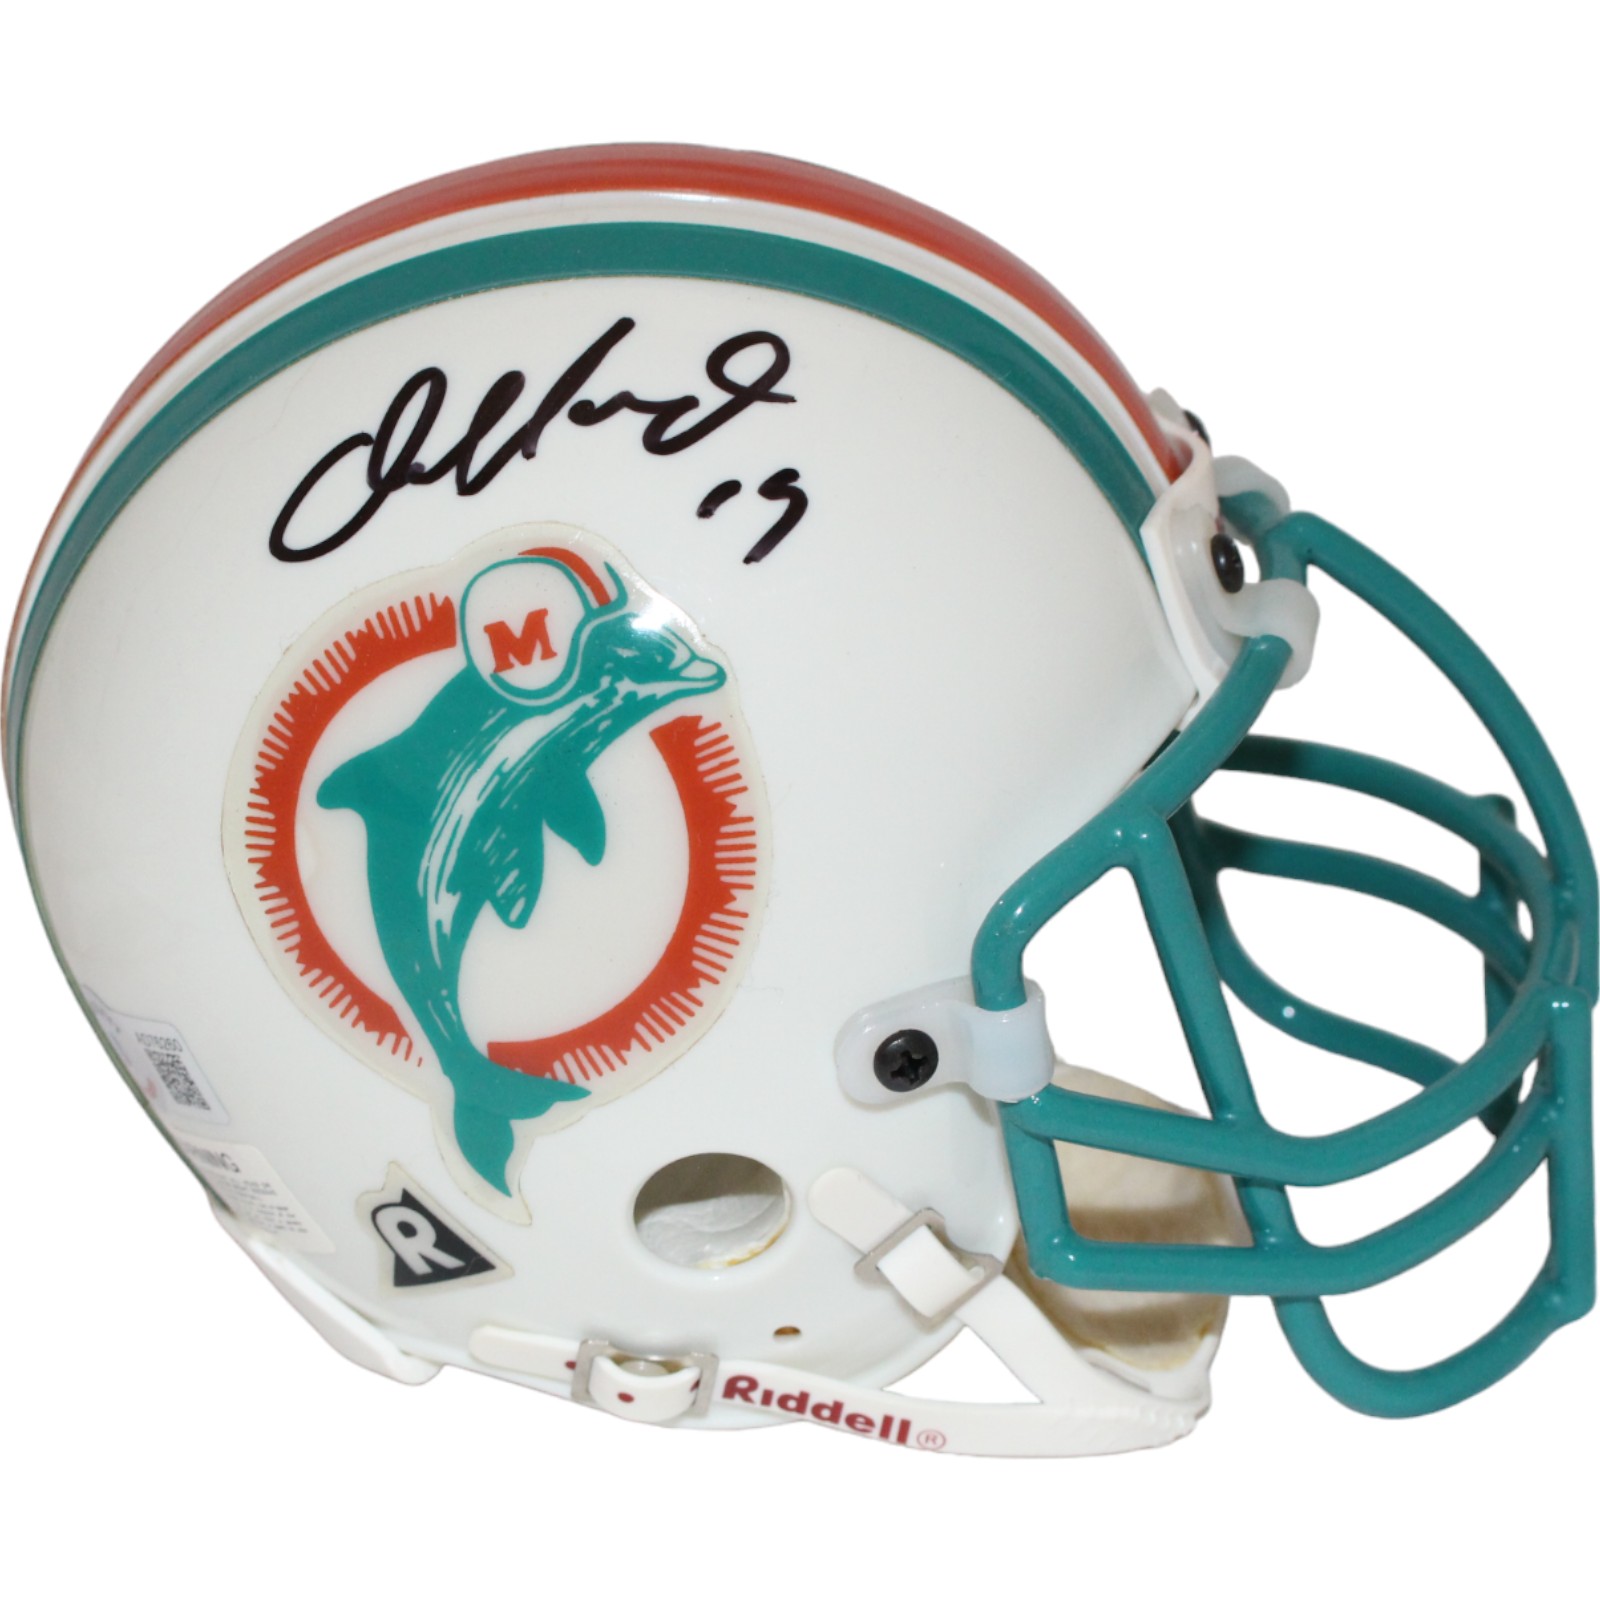 Dan Marino Signed Miami Dolphins VSR4 Authentic Mini Helmet Beckett 44148